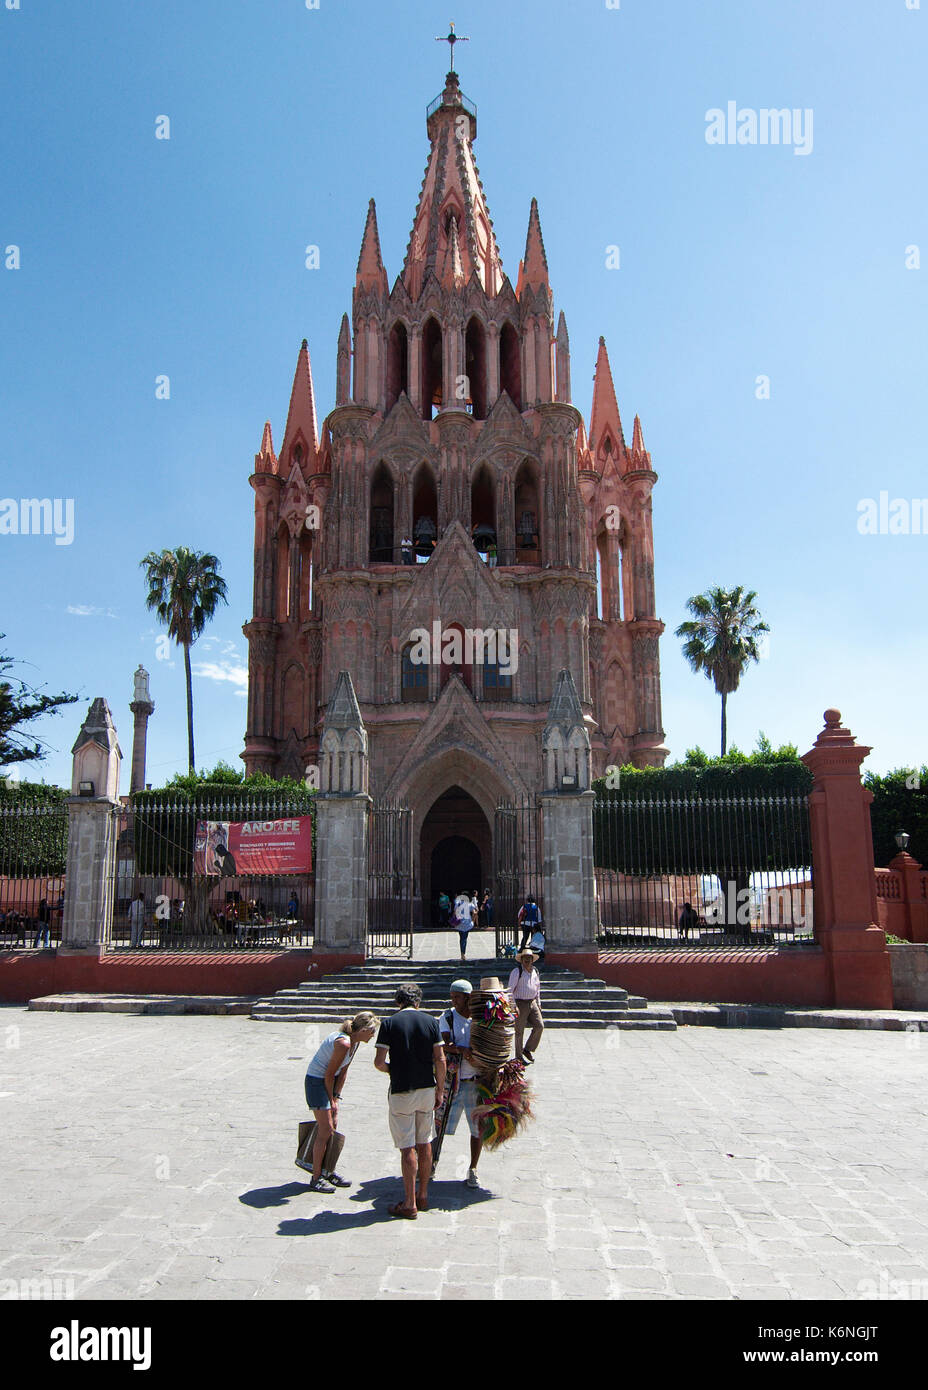 San Miguel de Allende, Guanajuato, Mexico - 2013: La Parroquia de San Miguel Arcángel is a neo-gothic style church at the town's zocalo. Stock Photo